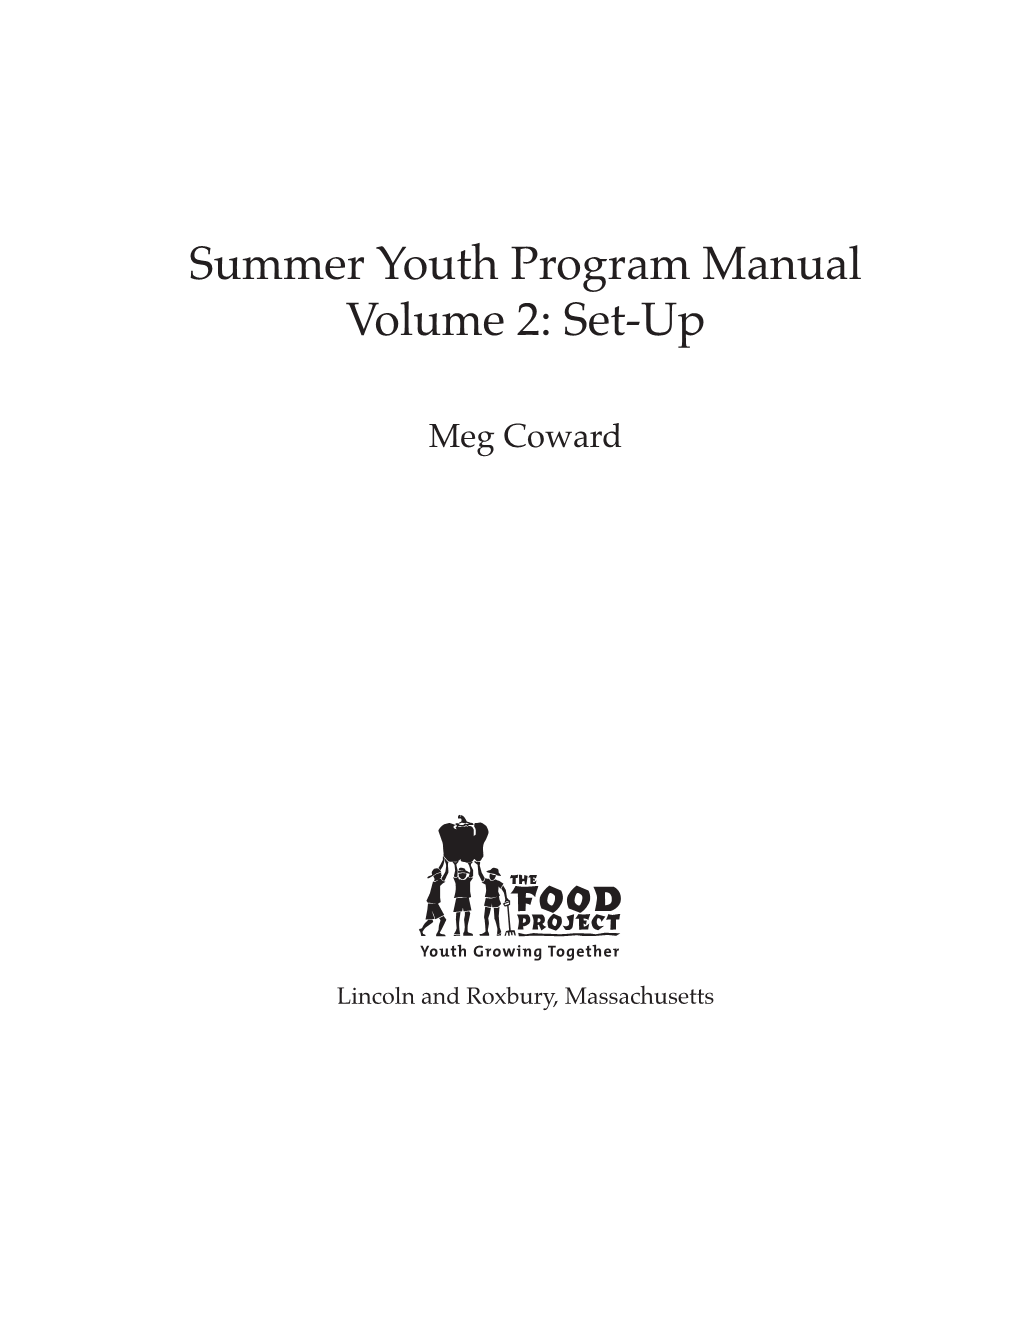 Summer Youth Program Manual Volume 2: Set-Up